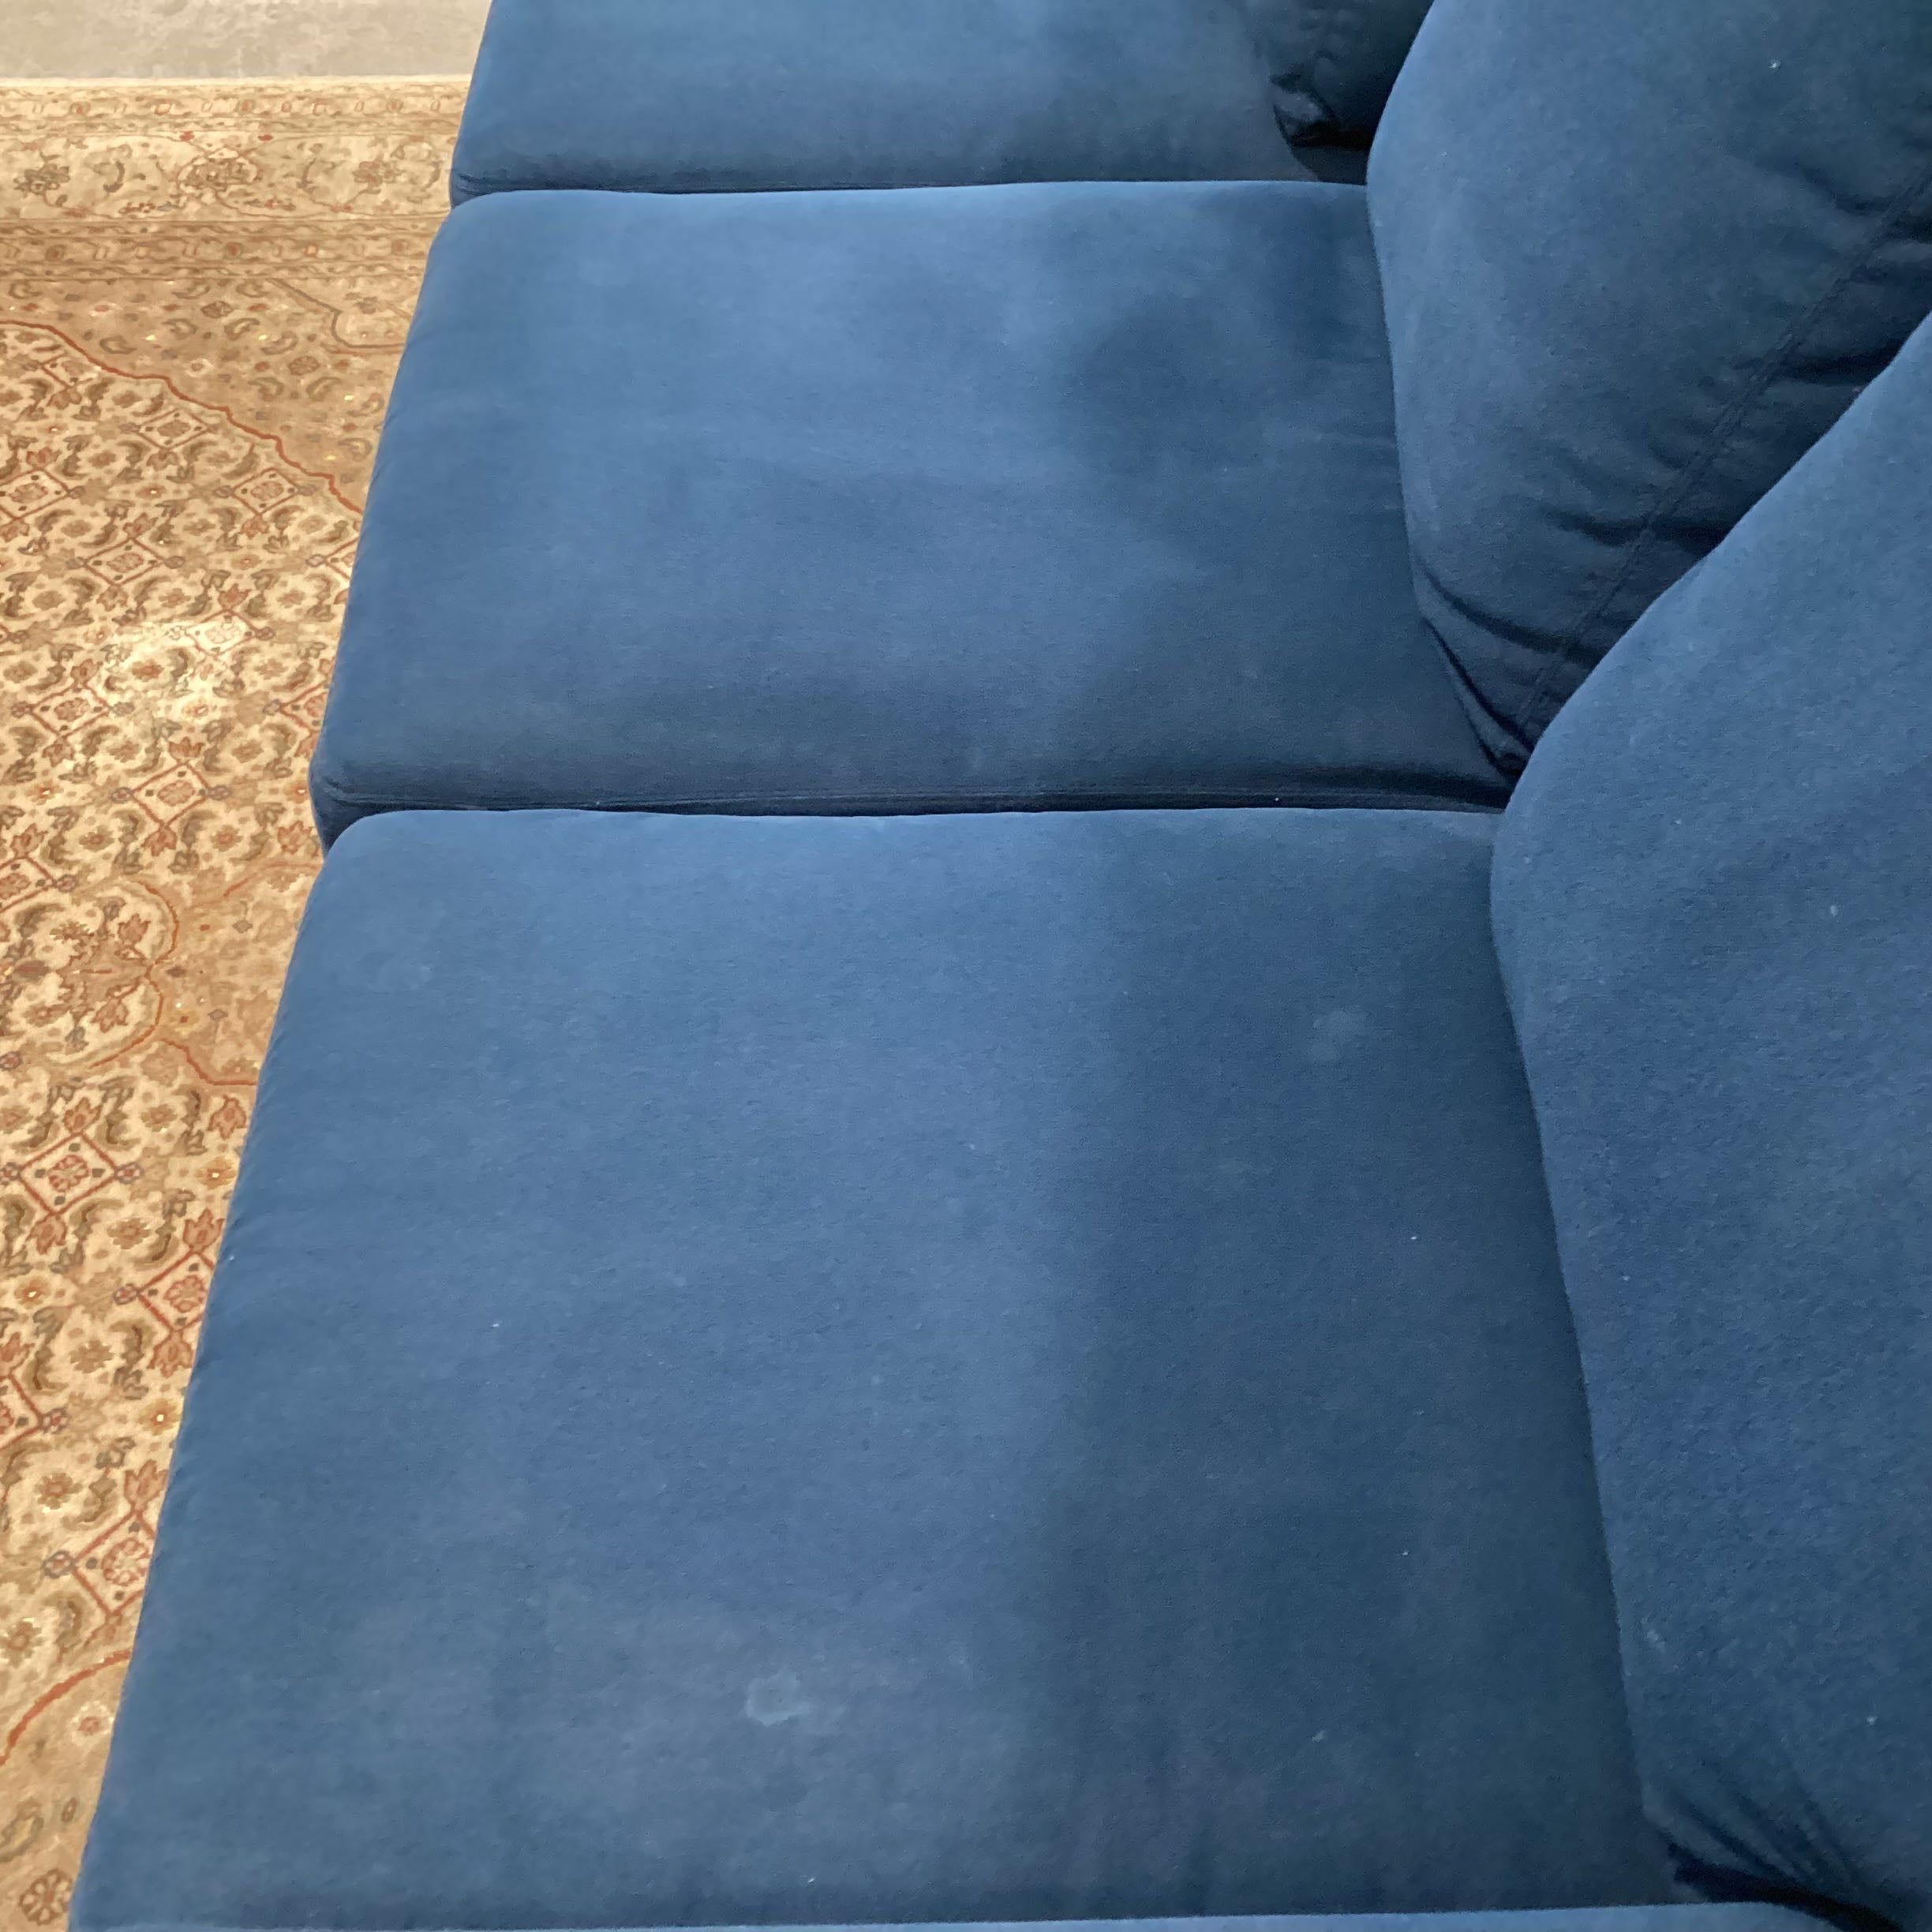 American Leather Comfort Sleeper Blue Queen Size Sofa